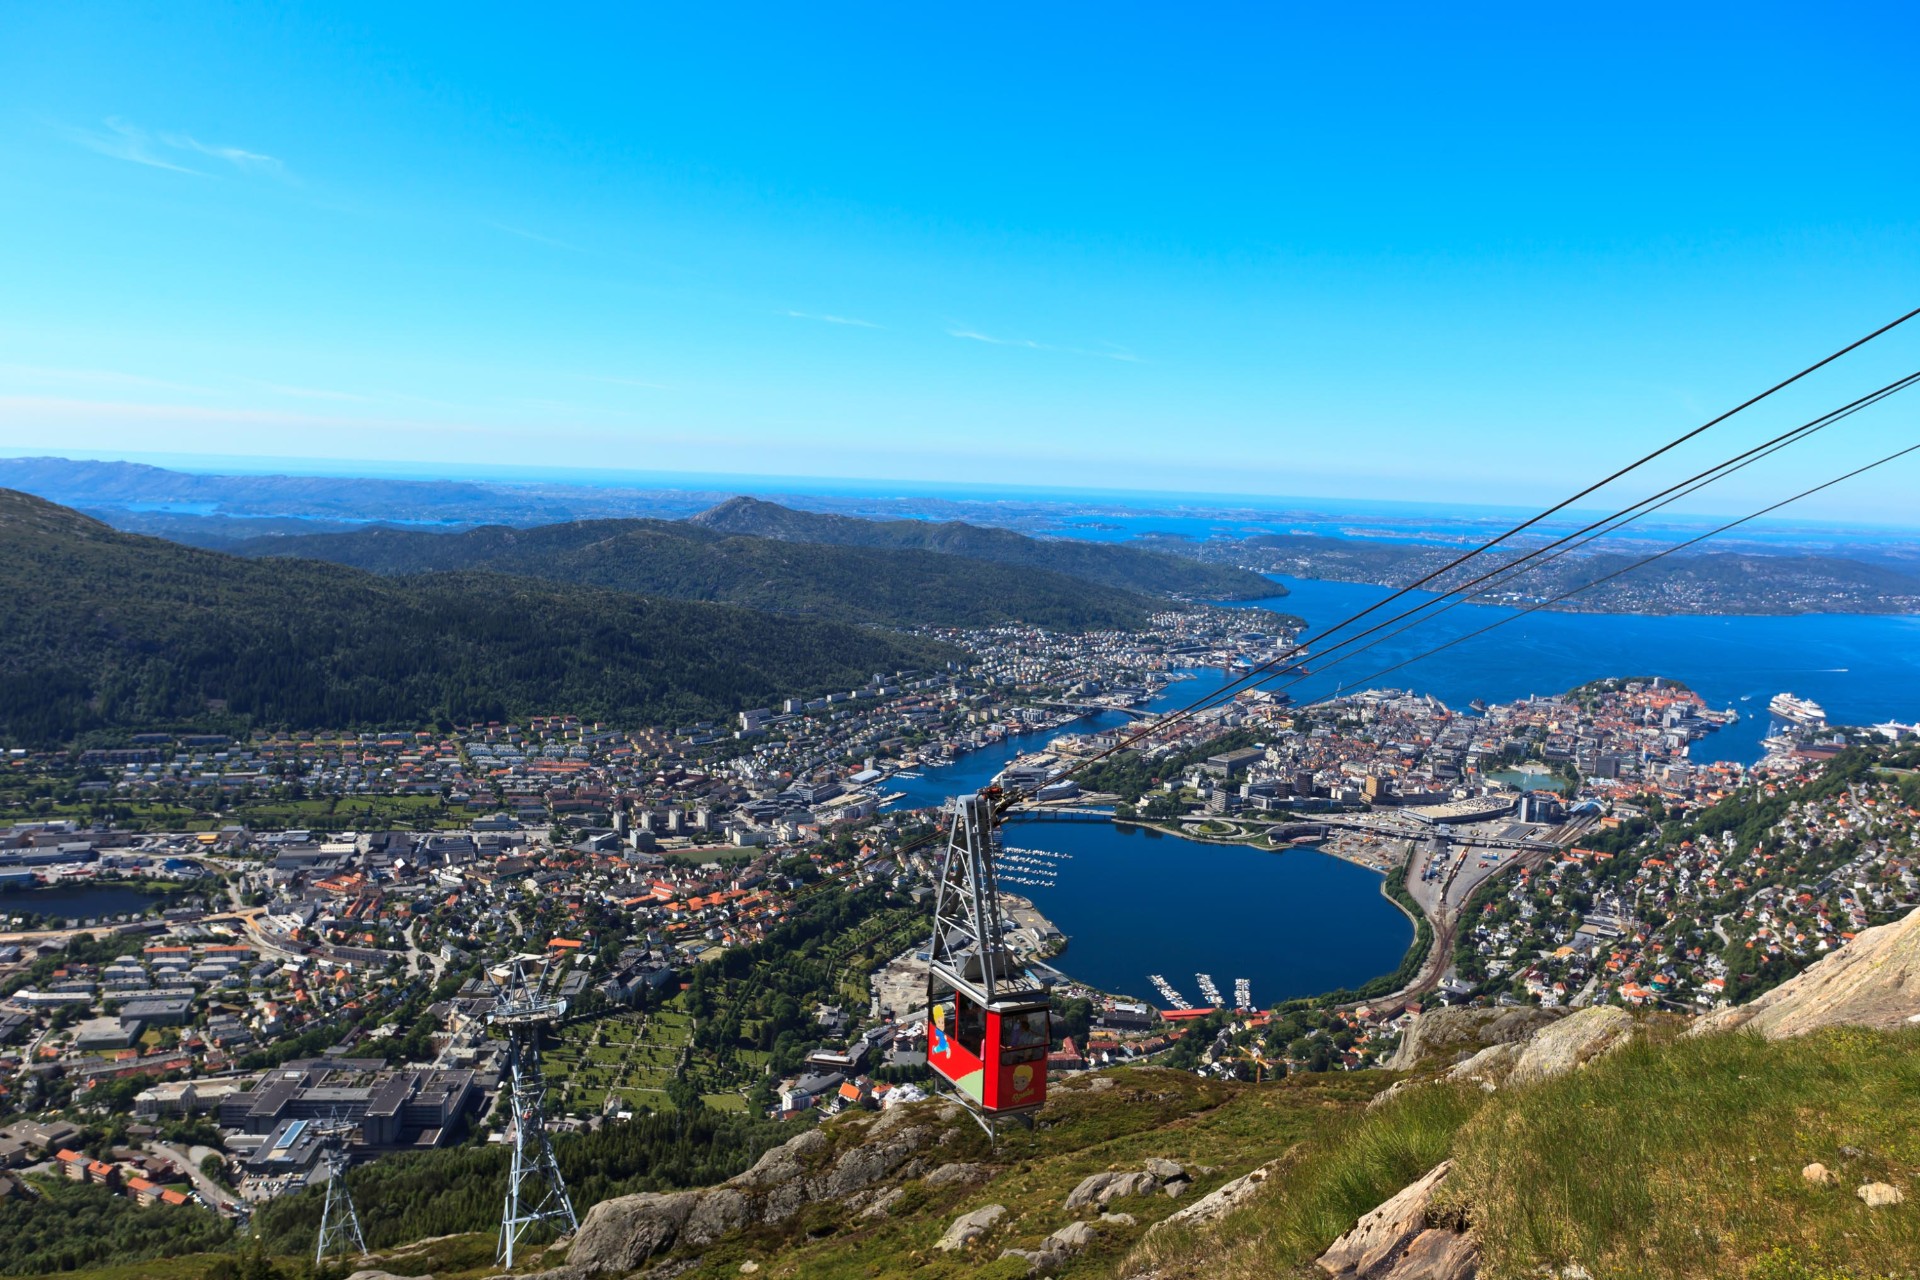 Ulriken Aerial tramway in Bergen, Norway